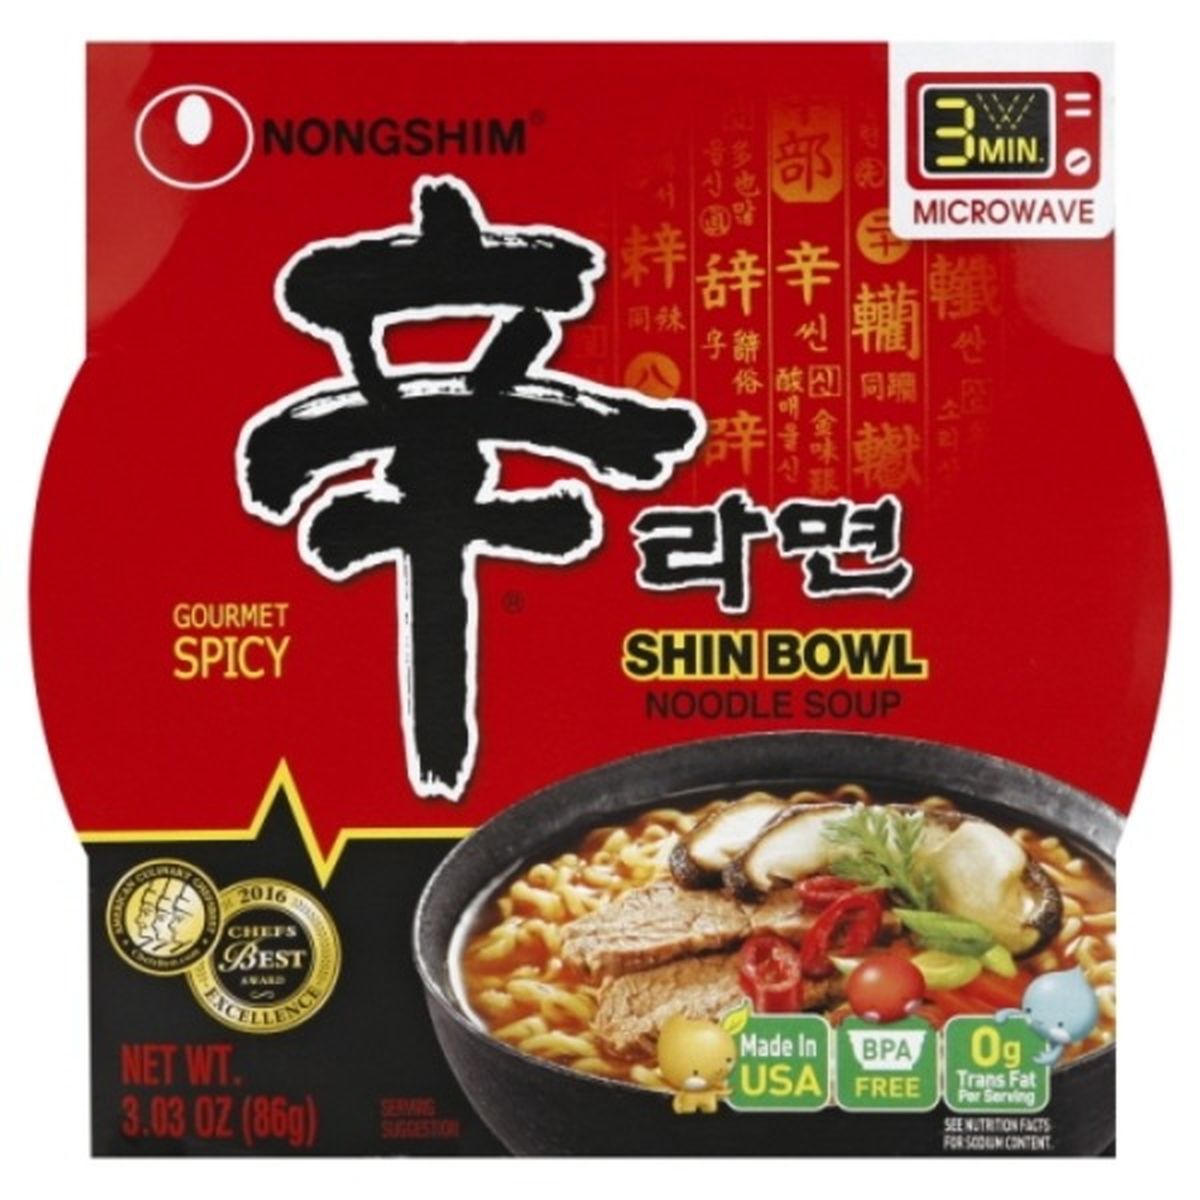 Calories in Nongshim Soup, Noodle, Shin Bowl, Gourmet Spicy